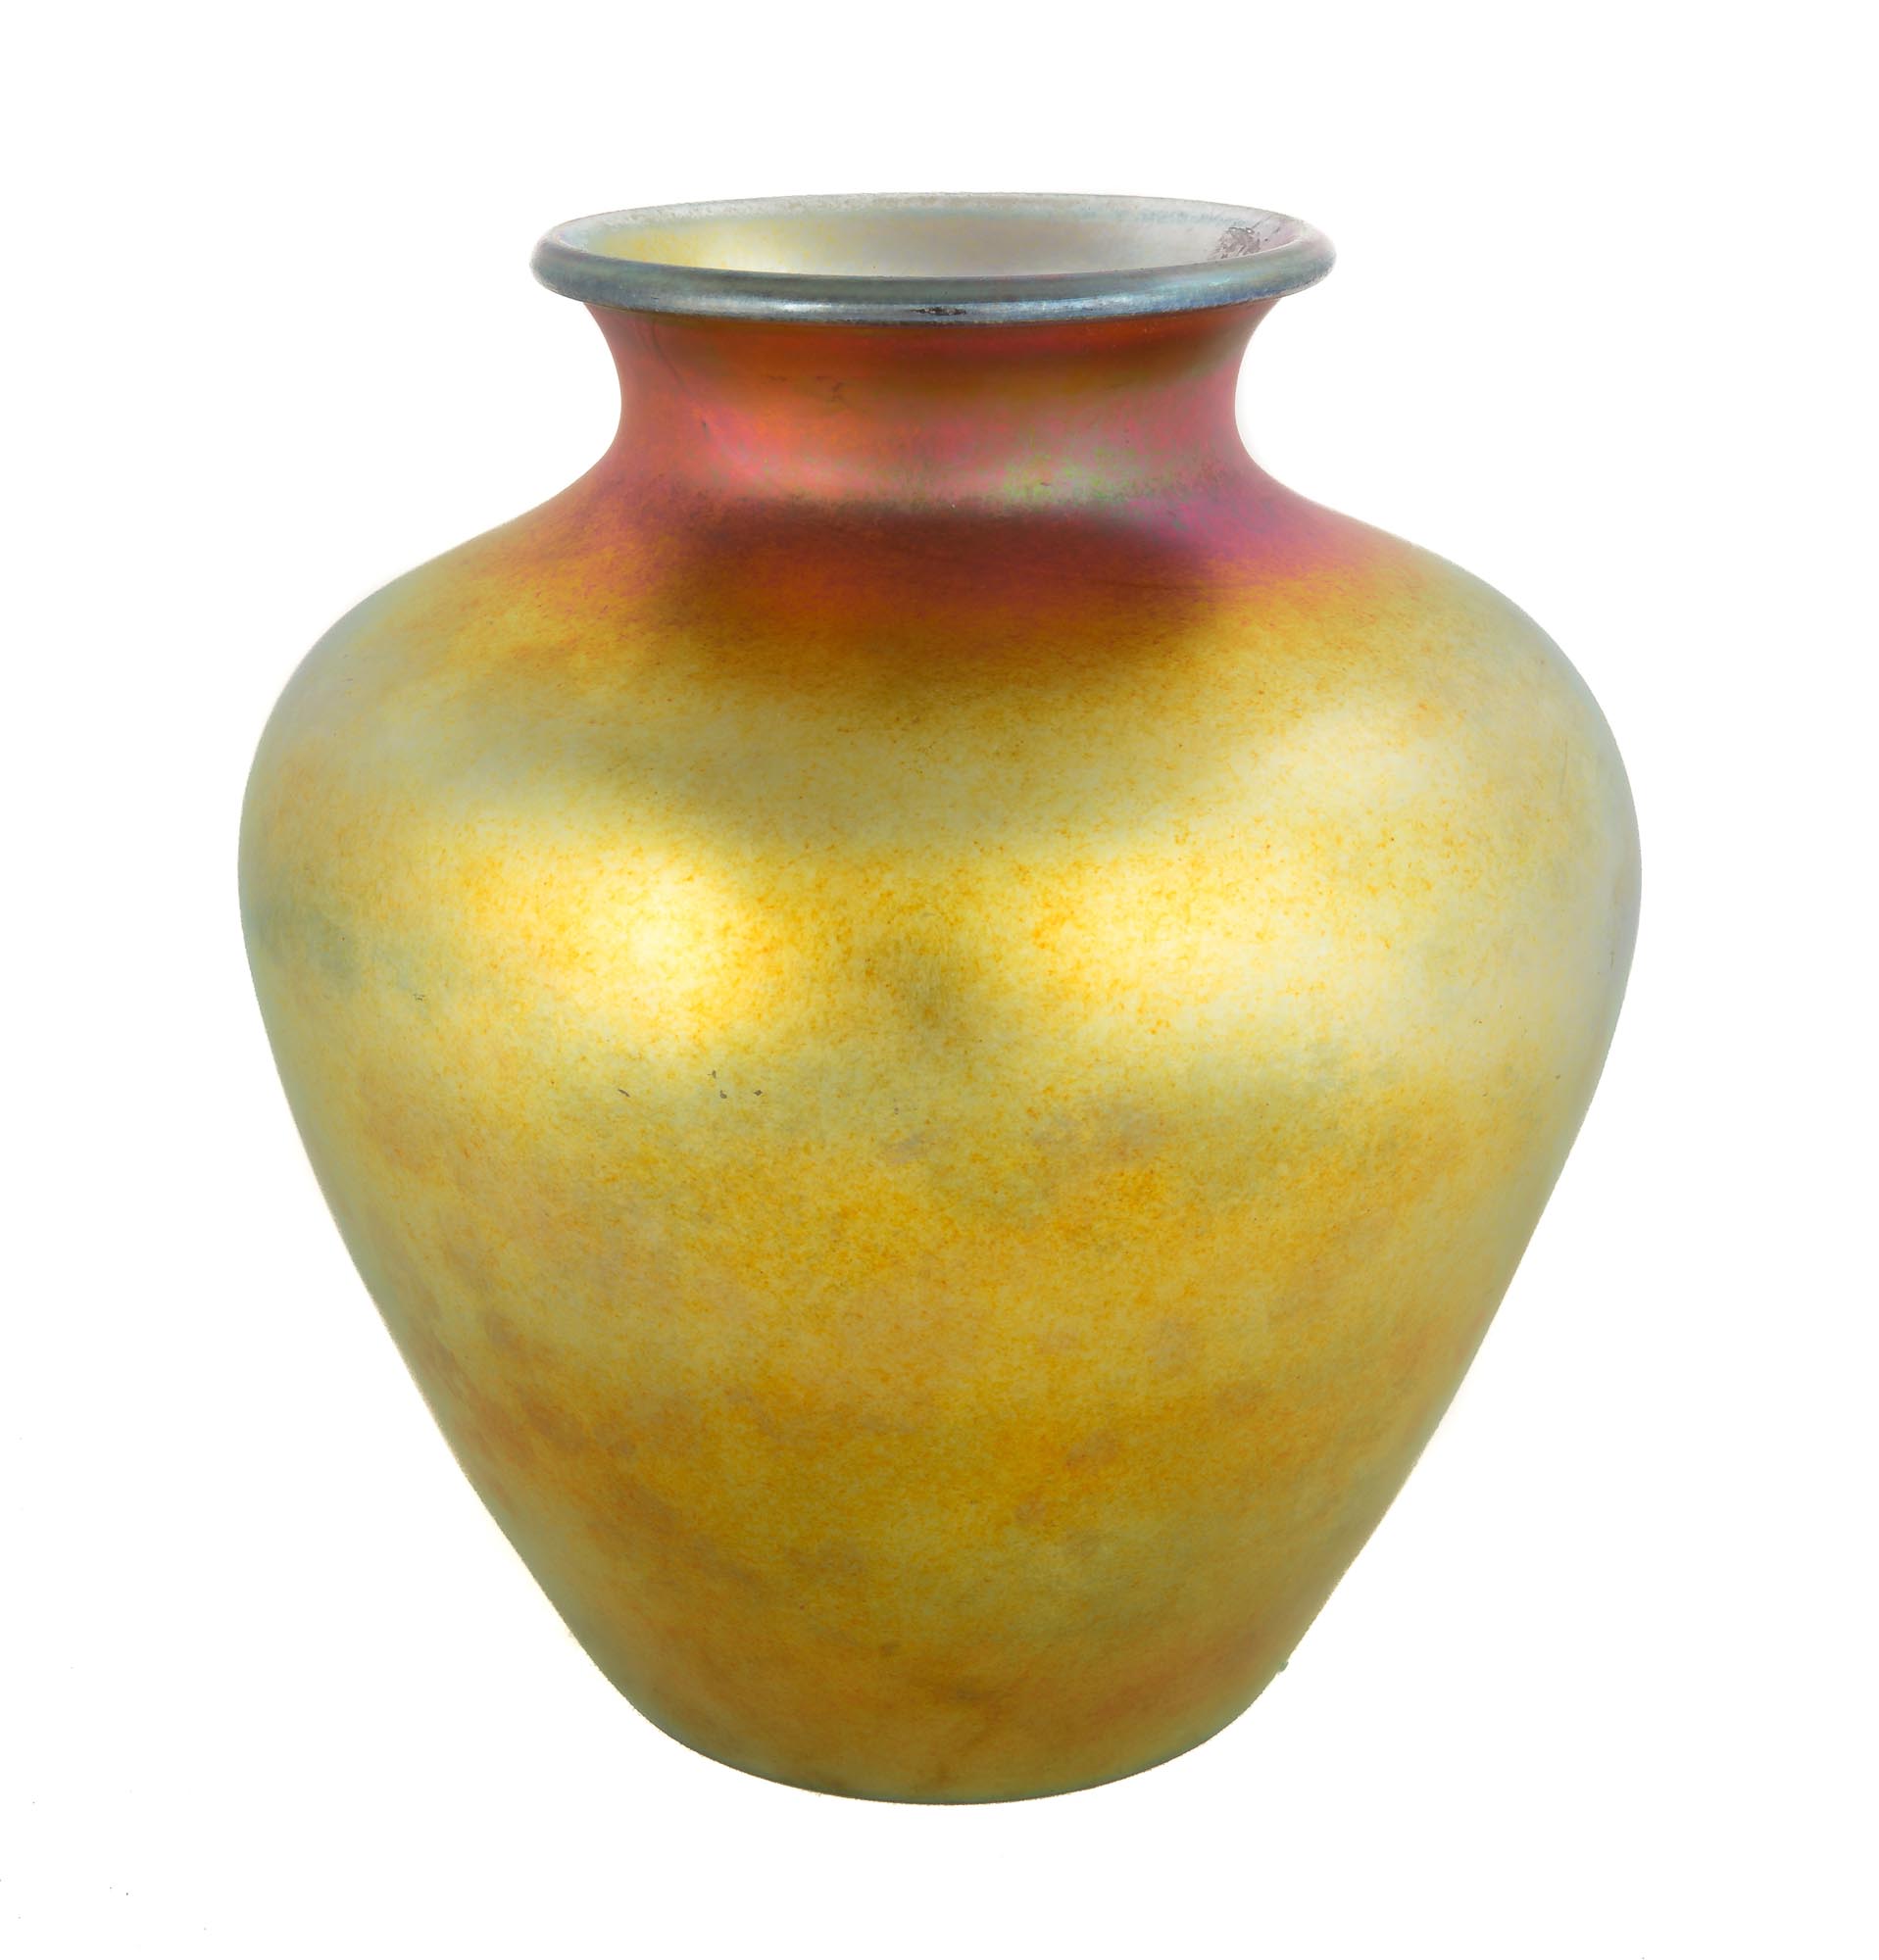 Steuben Gold Aurene Vase. Inscribed Steuben Aurene and numbered. Excellent. Ht. 11" Dia. 9 1/2". The